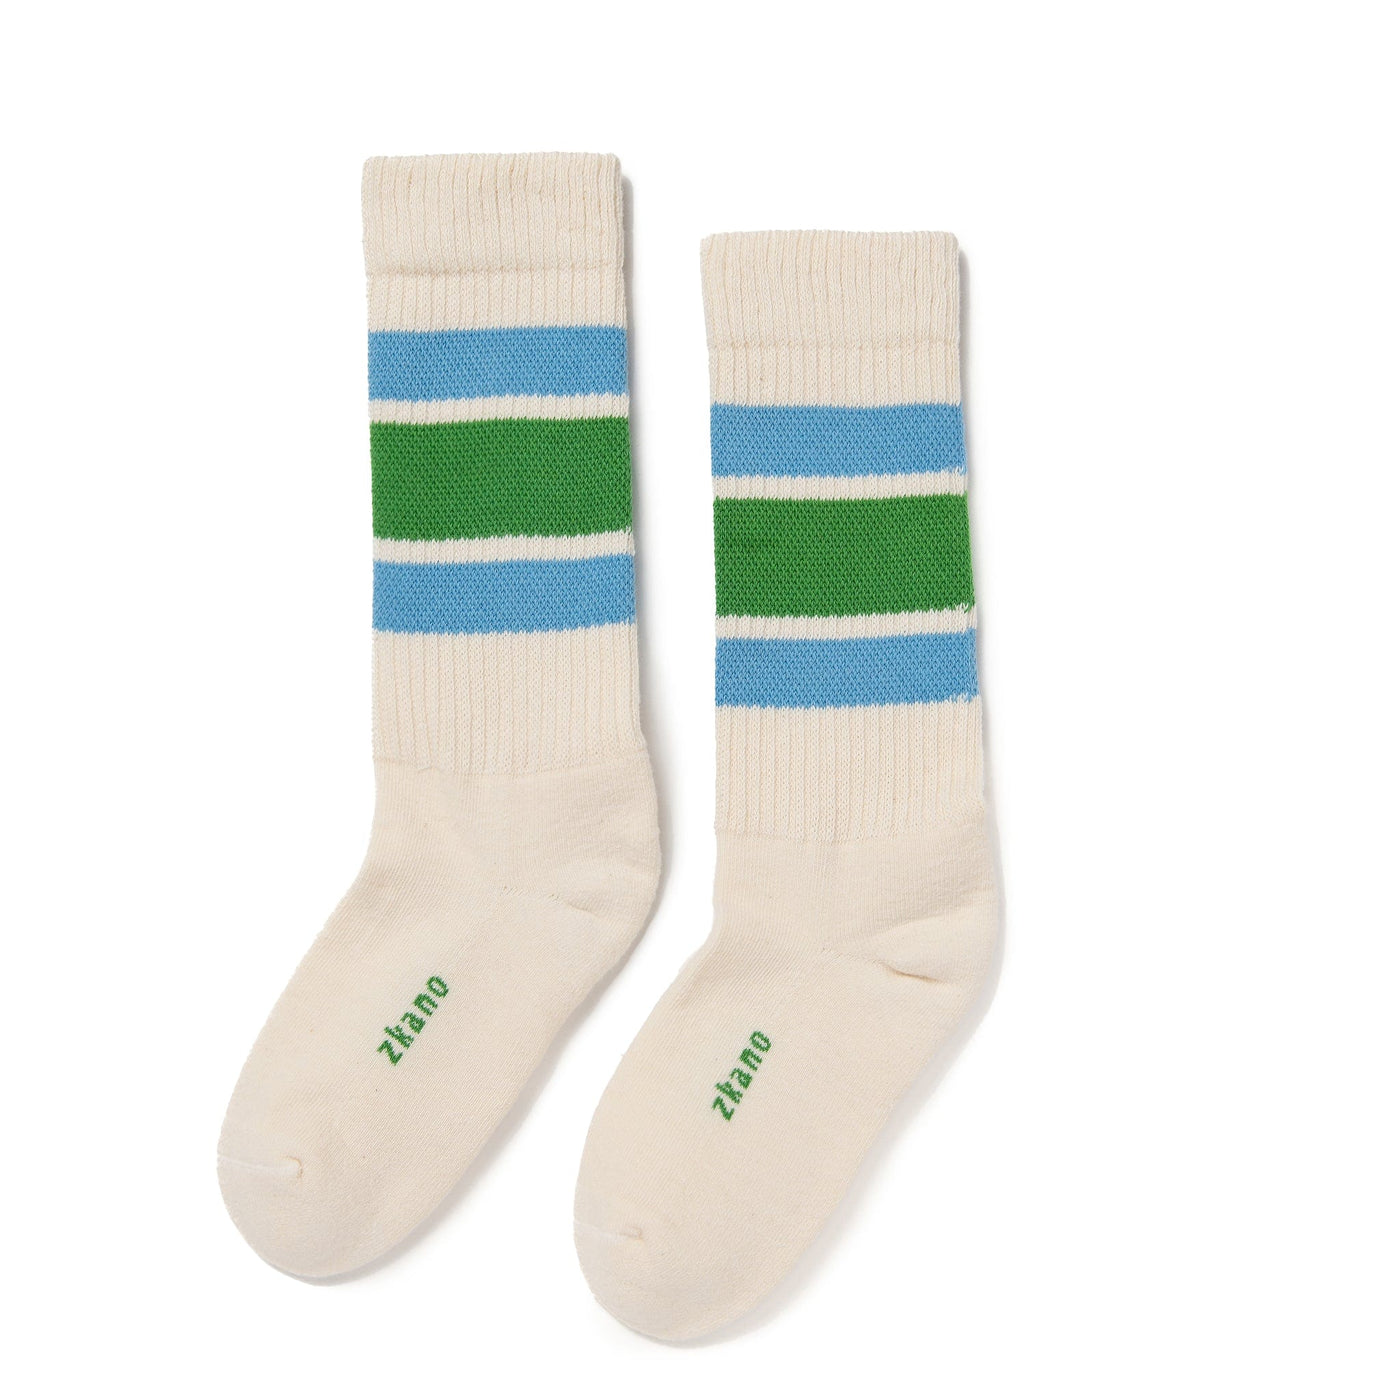 Zkano Crew Medium 1991 Retro Stripe - Organic Cotton Crew Socks - Kelly organic-socks-made-in-usa